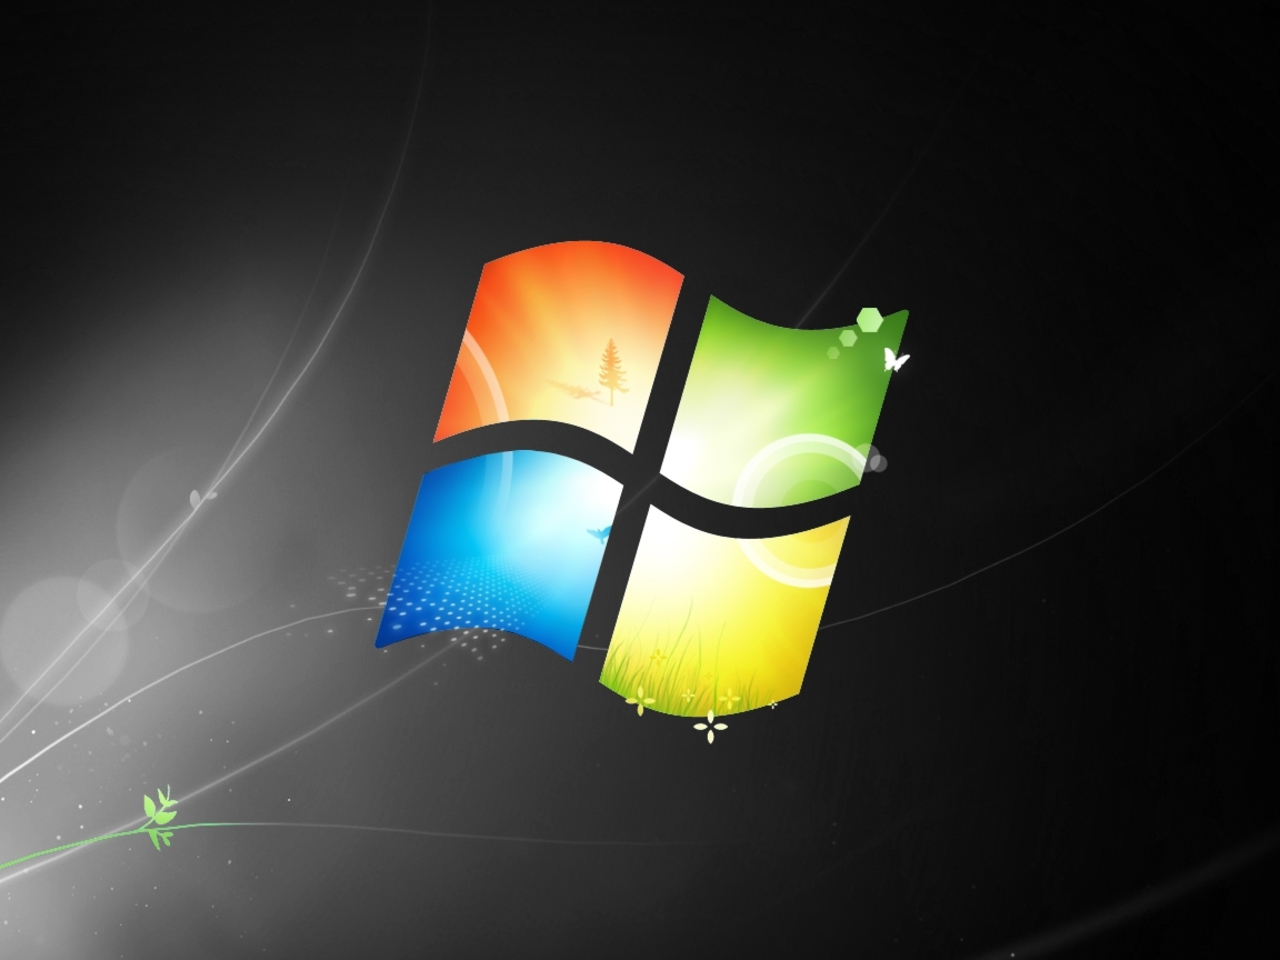 temas de fondo de pantalla de windows 8.1,ligero,gráficos,diseño gráfico,animación,sistema operativo